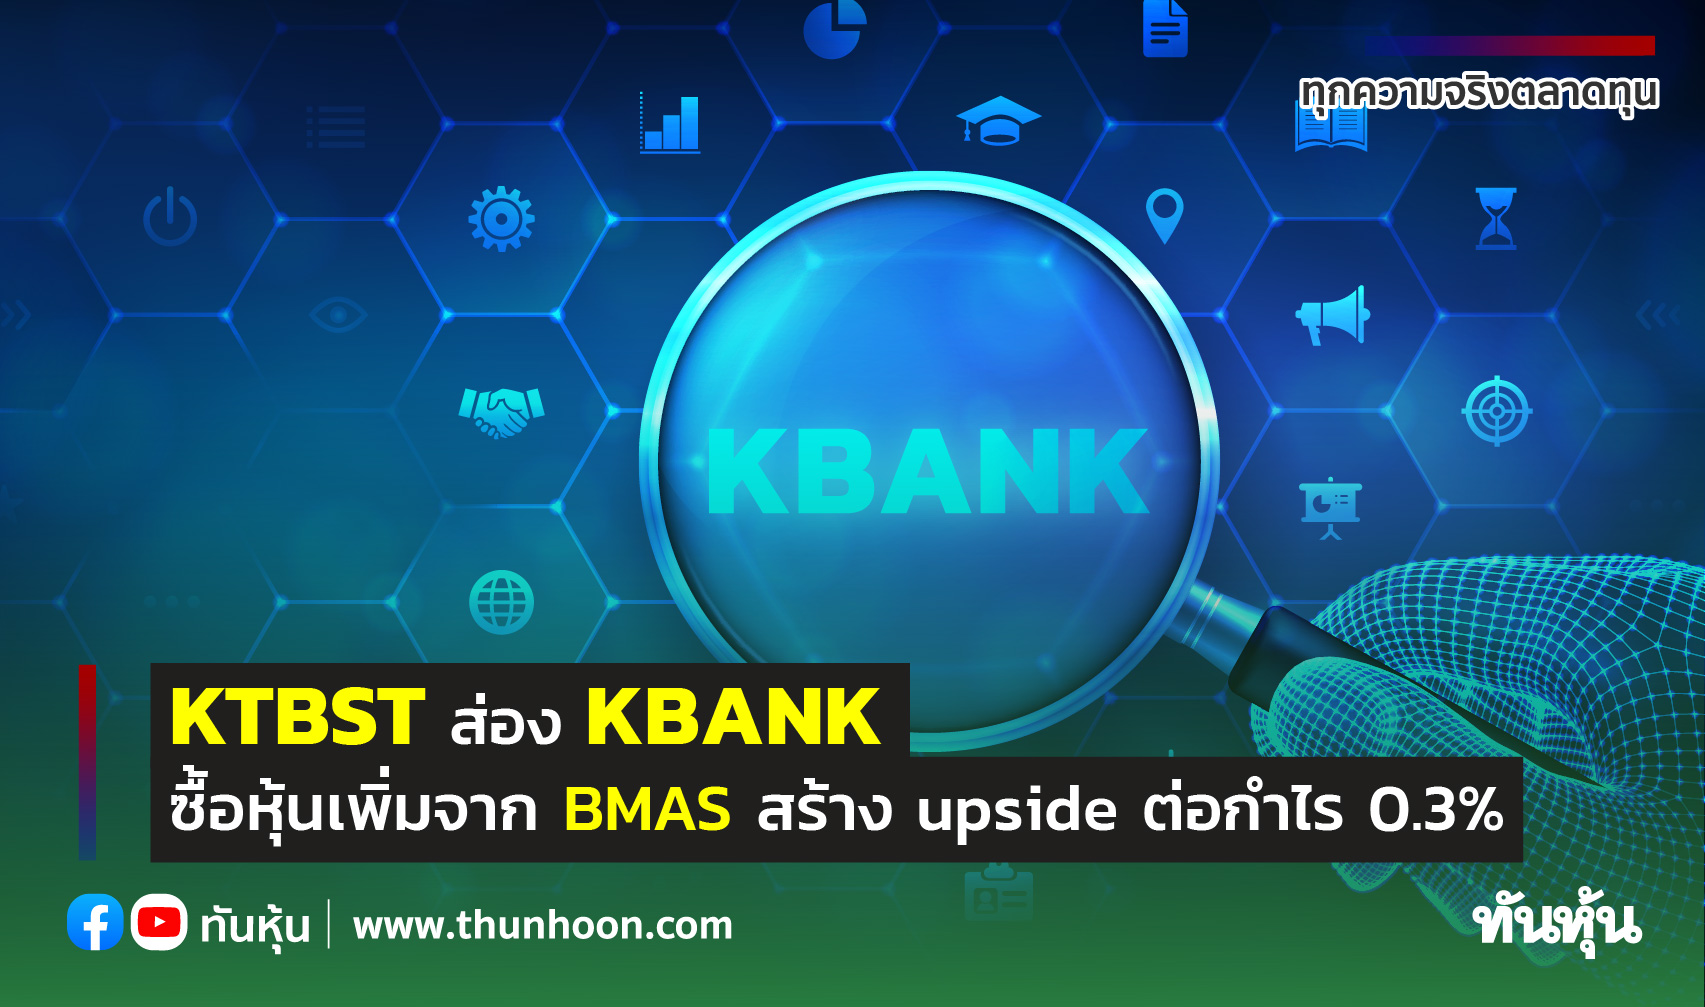 KTBST ส่อง KBANK ซื้อหุ้นเพิ่มจาก BMAS อัพไซต์ต่อกำไร 0.3%